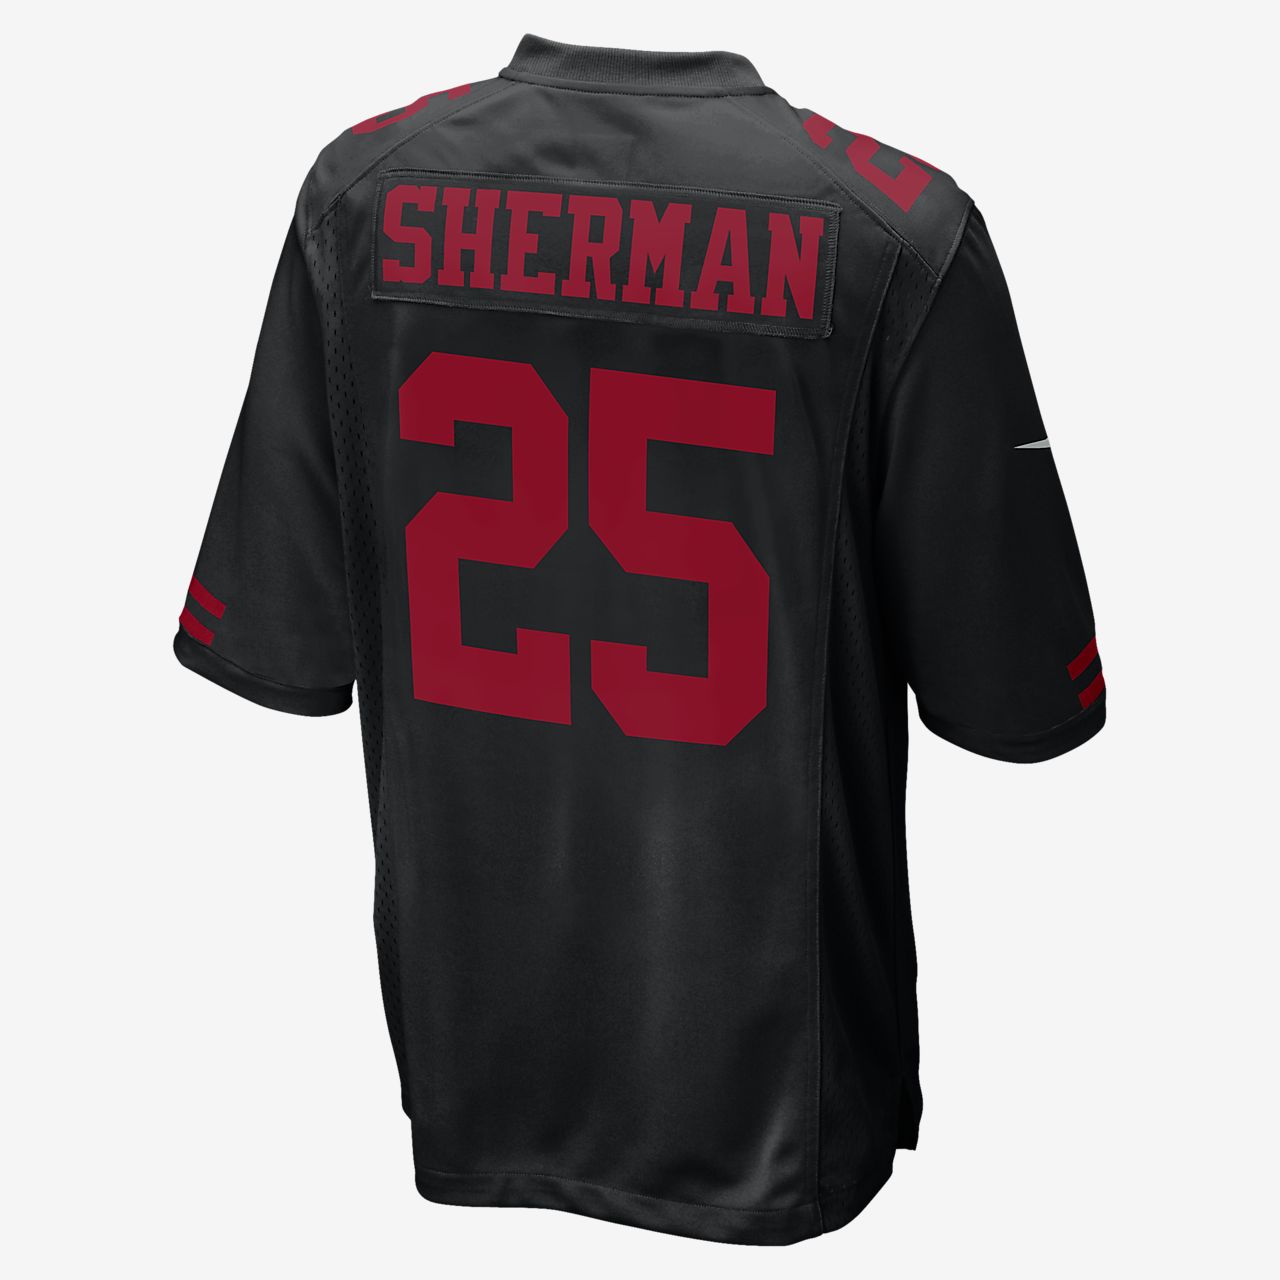 sherman nfl jersey